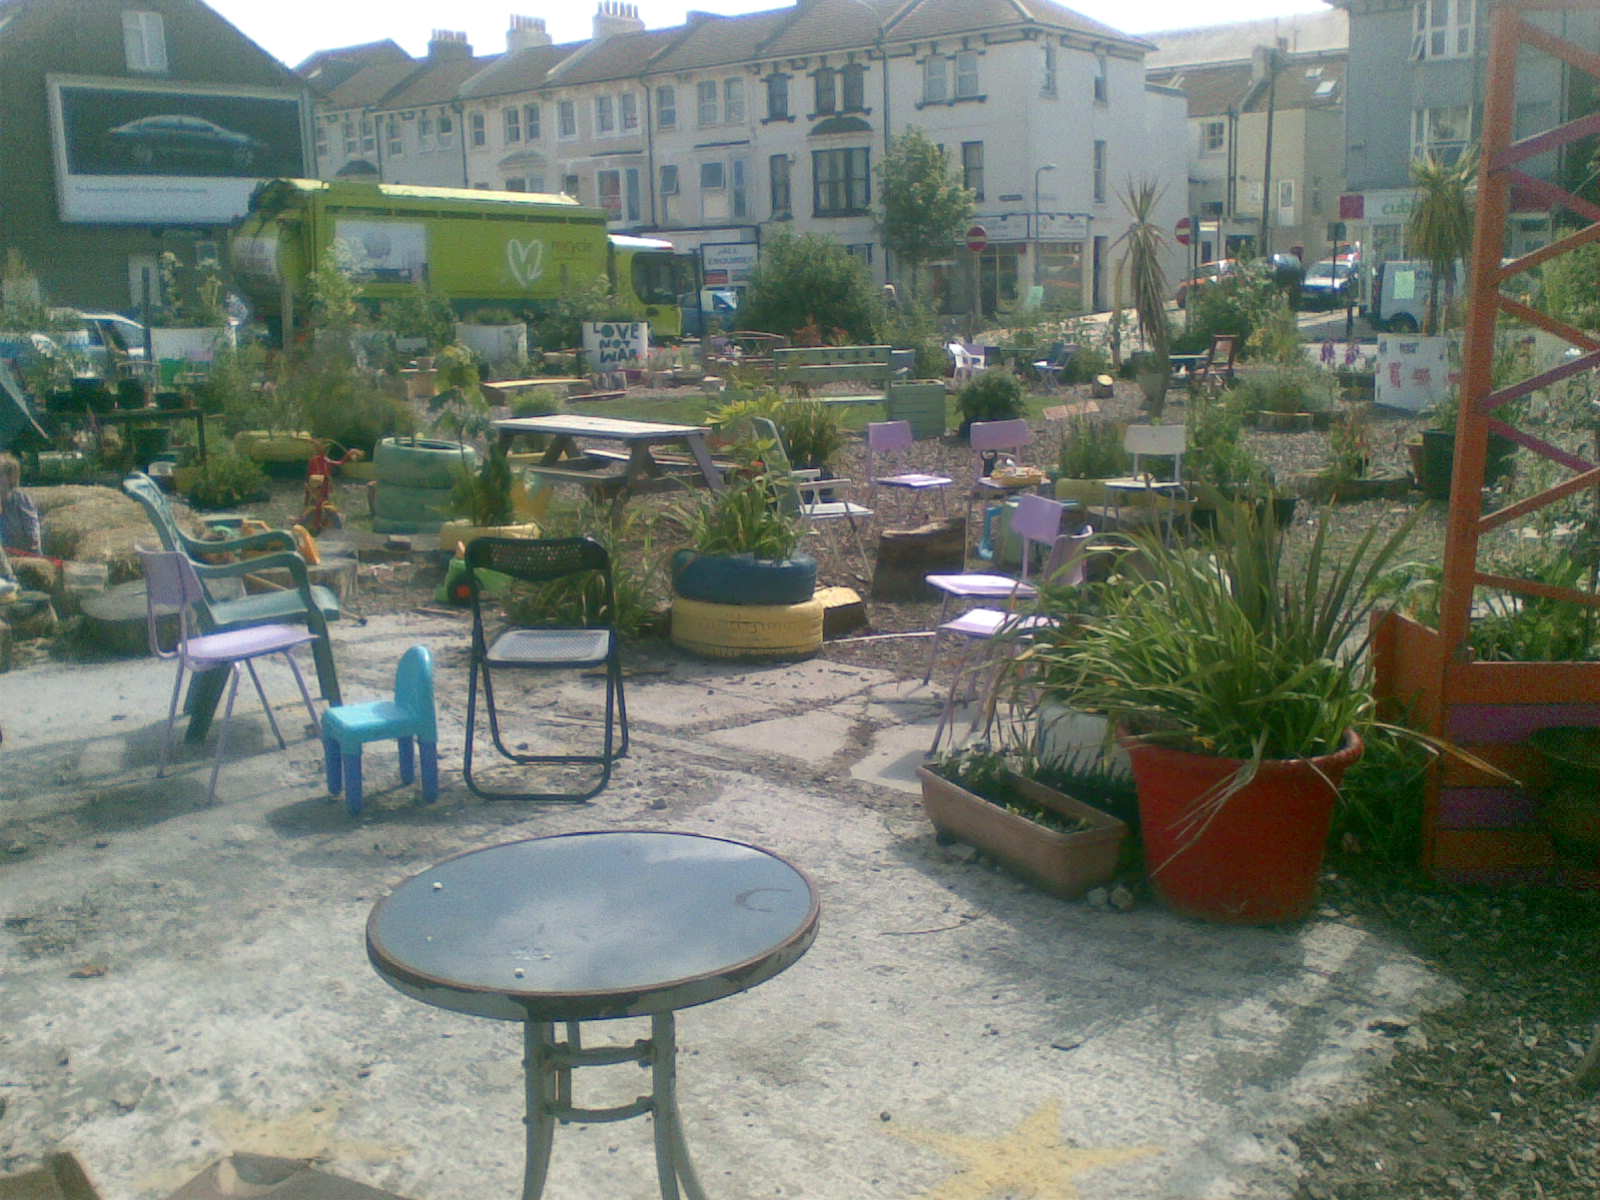 Lewes Road Community Garden - summer haven